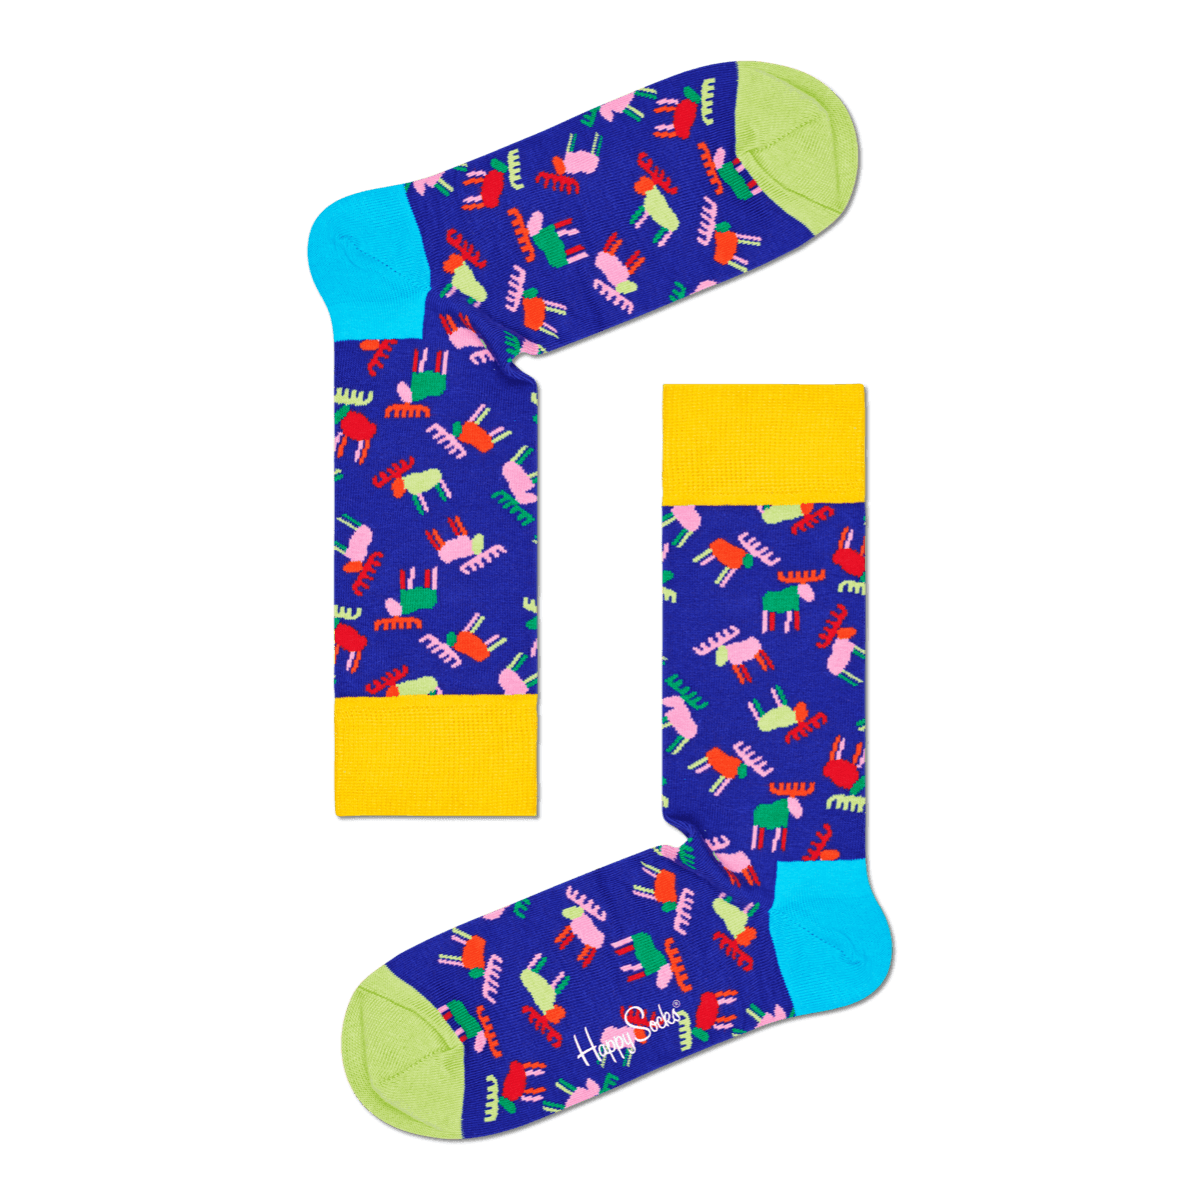 Happy Socks 3-Pack Swedish Edition Gift Set - No Generation